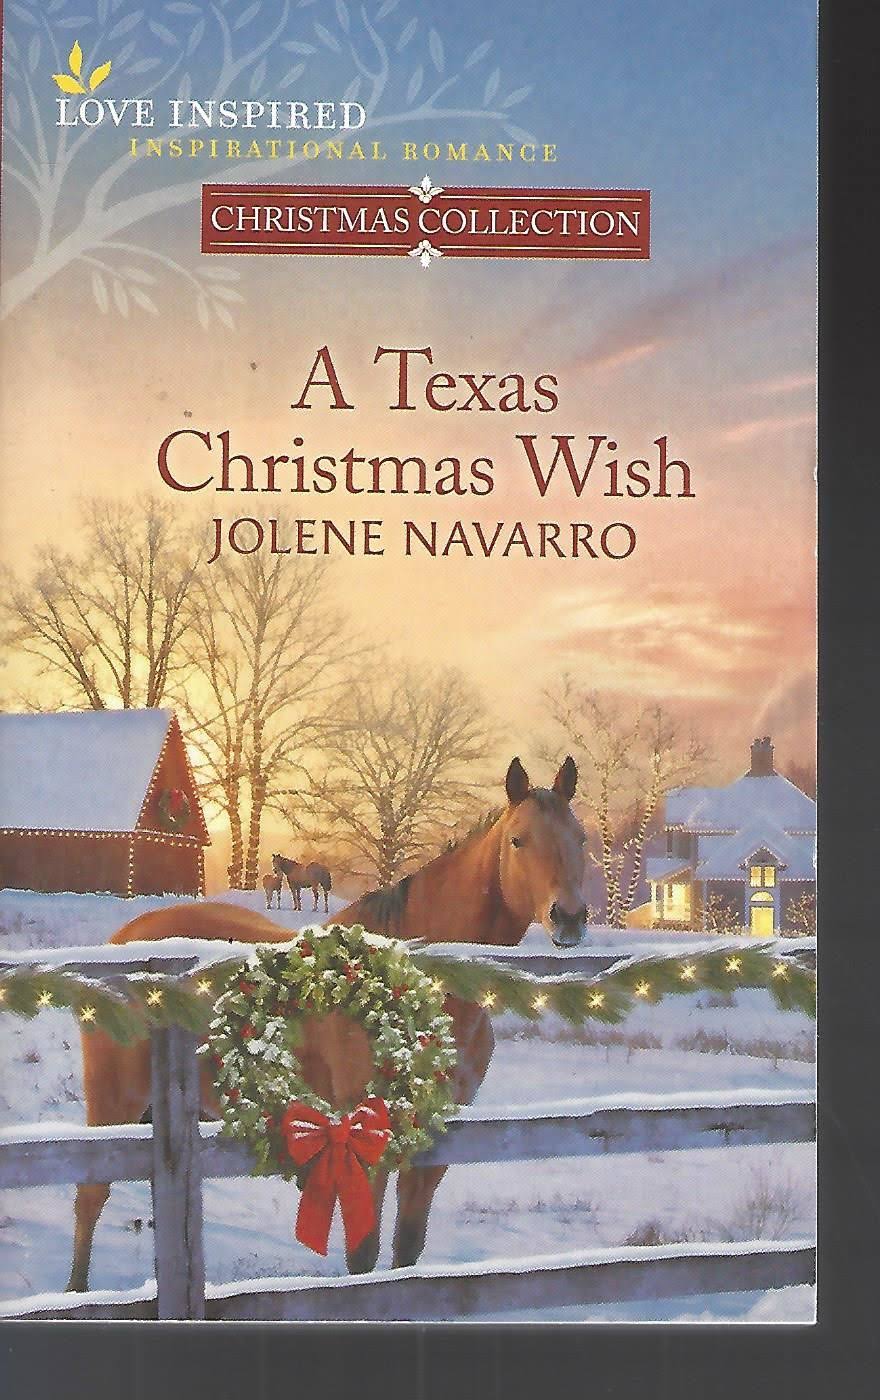 A Texas Christmas Wish [Book]